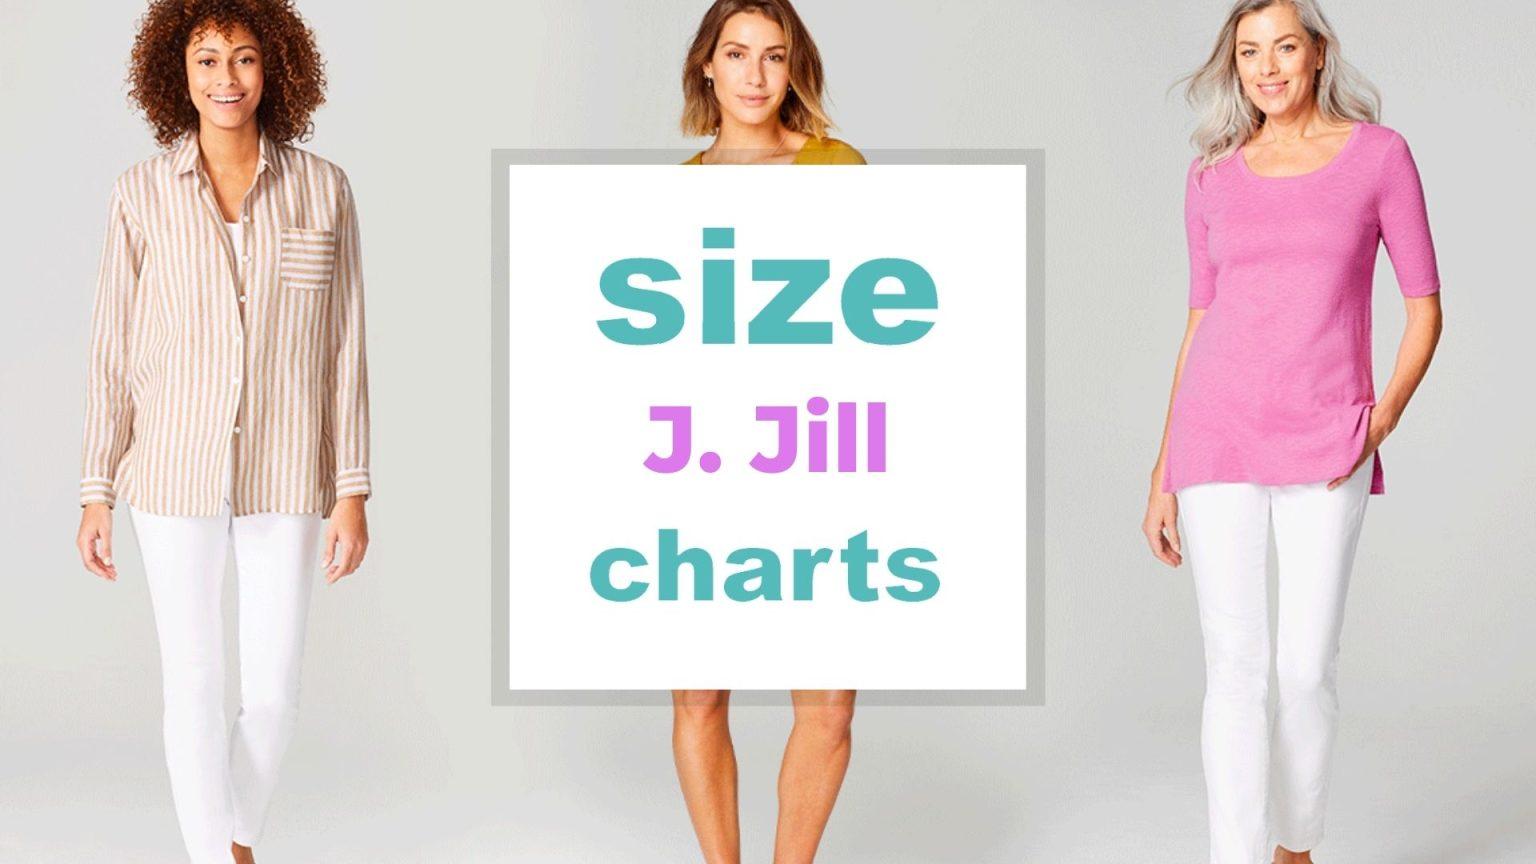 J jill Size Charts for Women